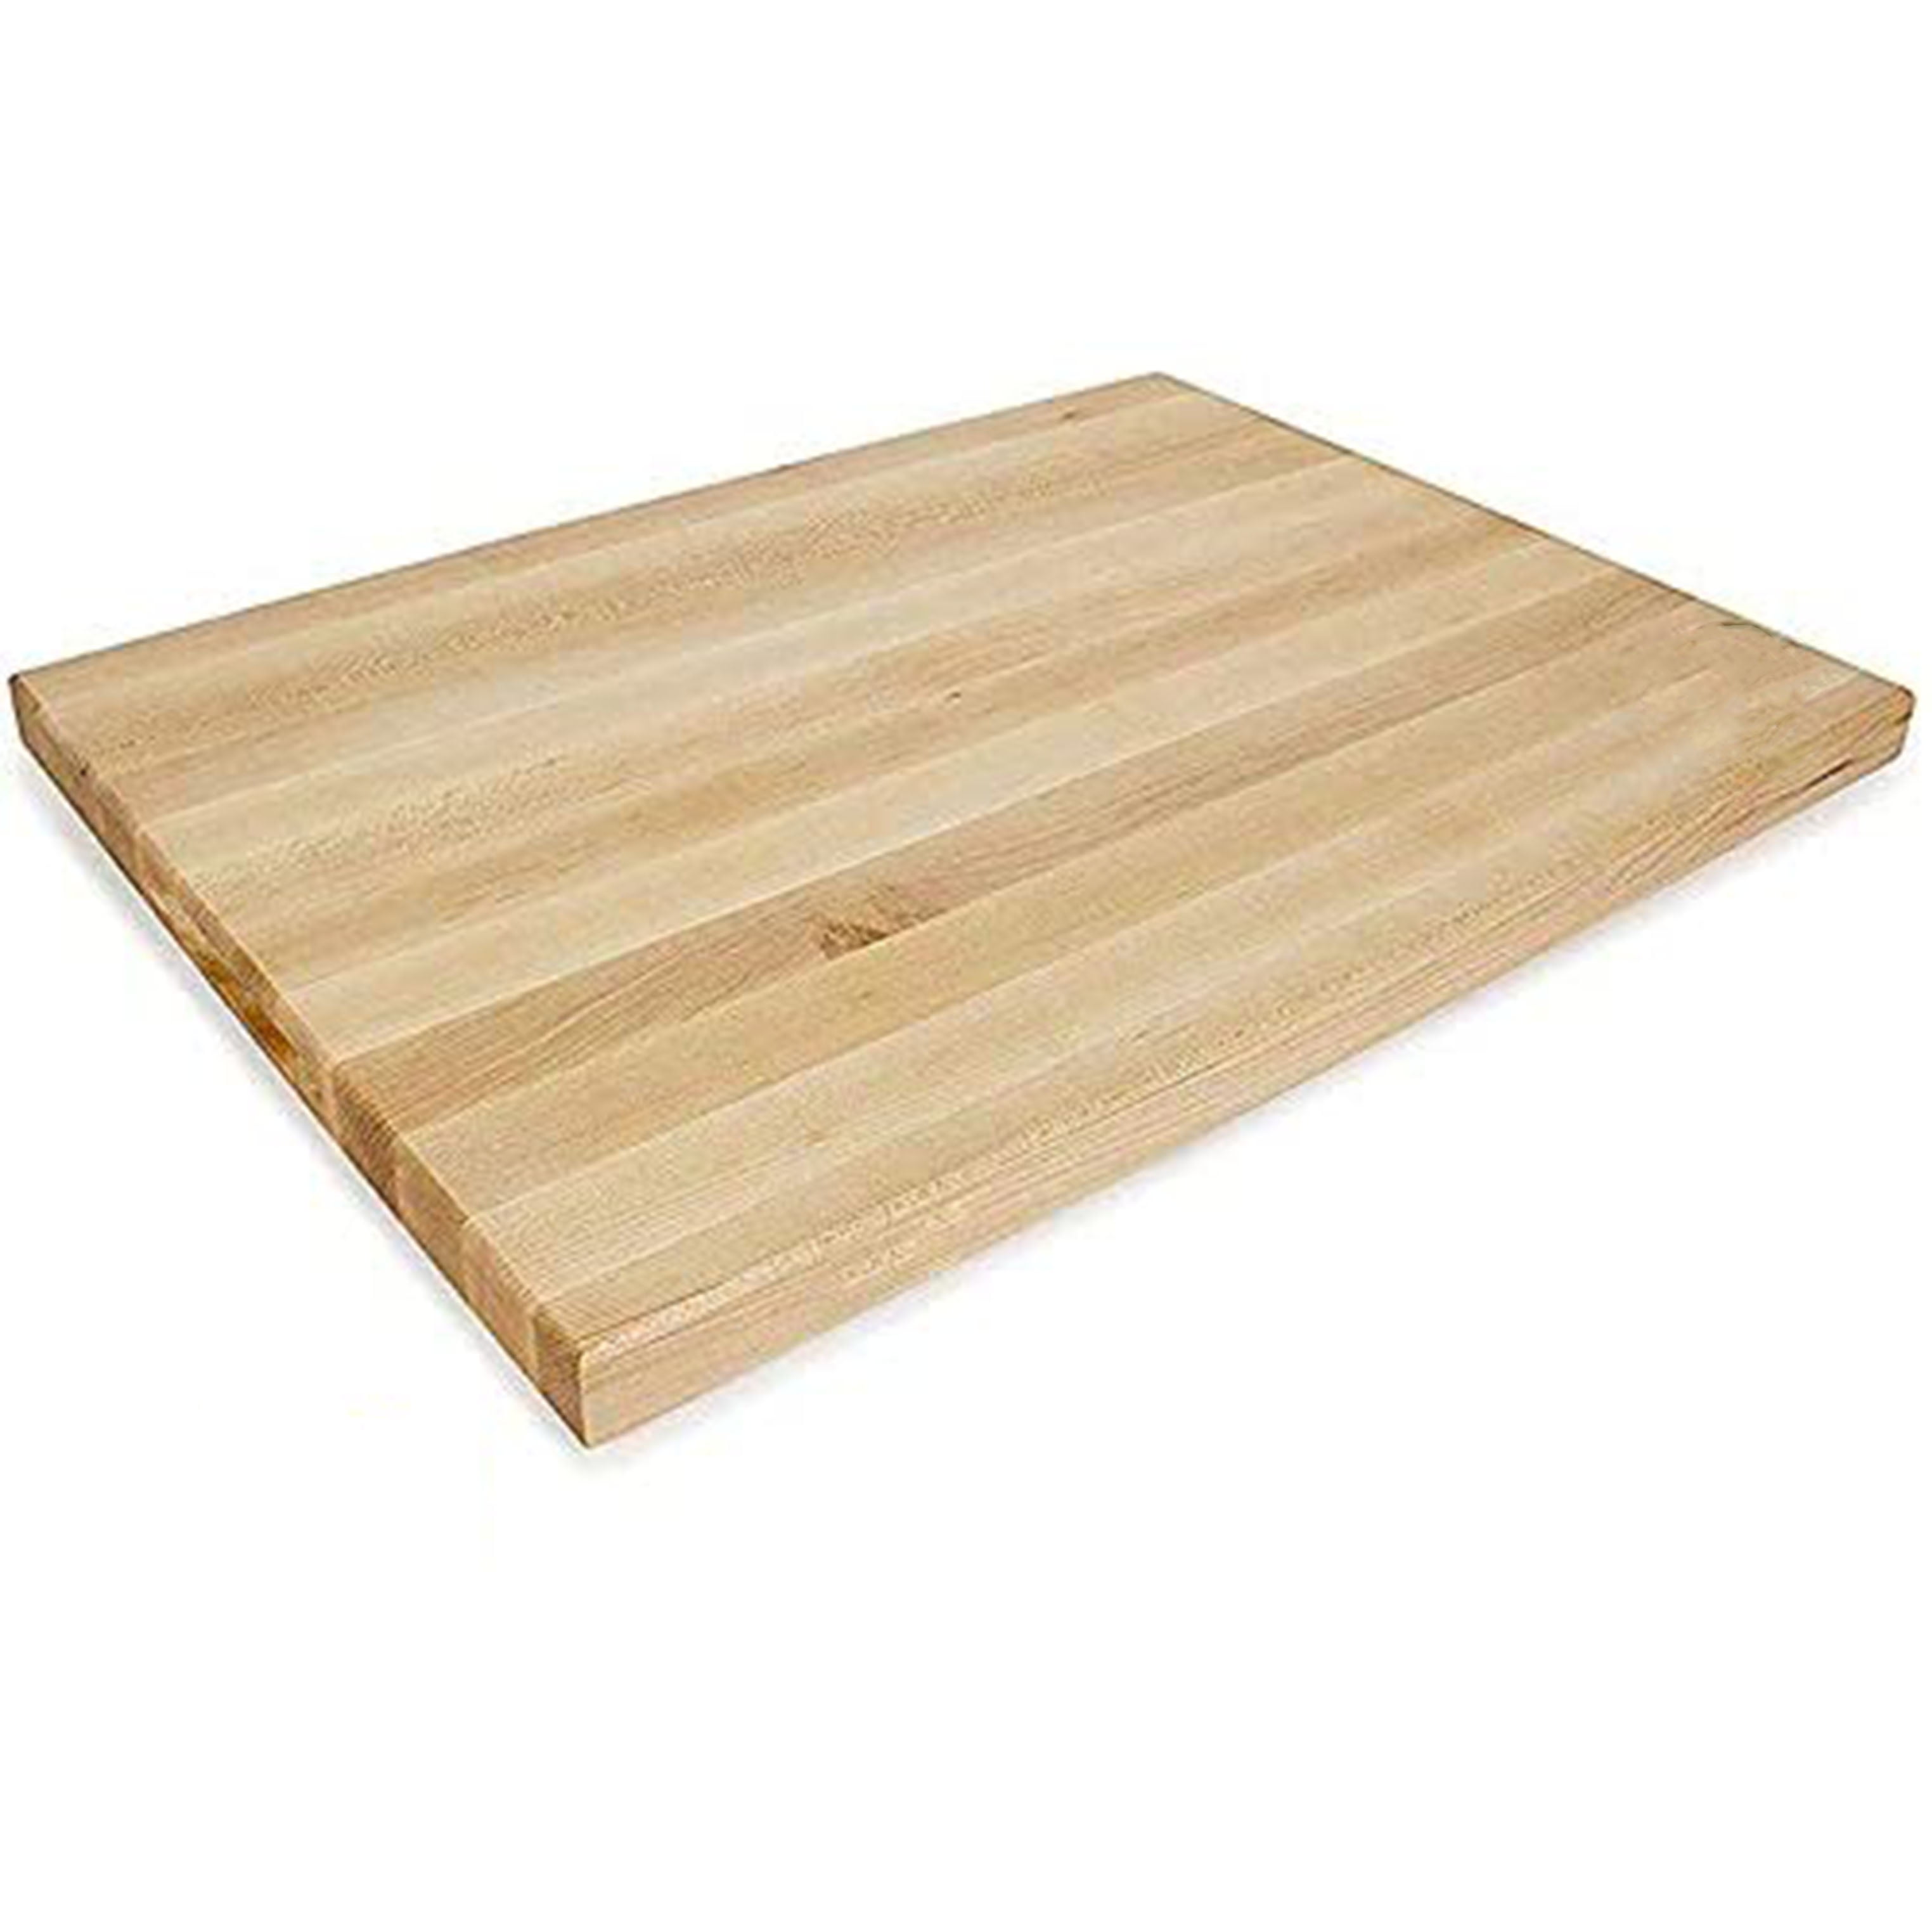 30" x 18" x 1 3/4" Wood Commercial Restaurant Solid Cutting Board Butcher Block 